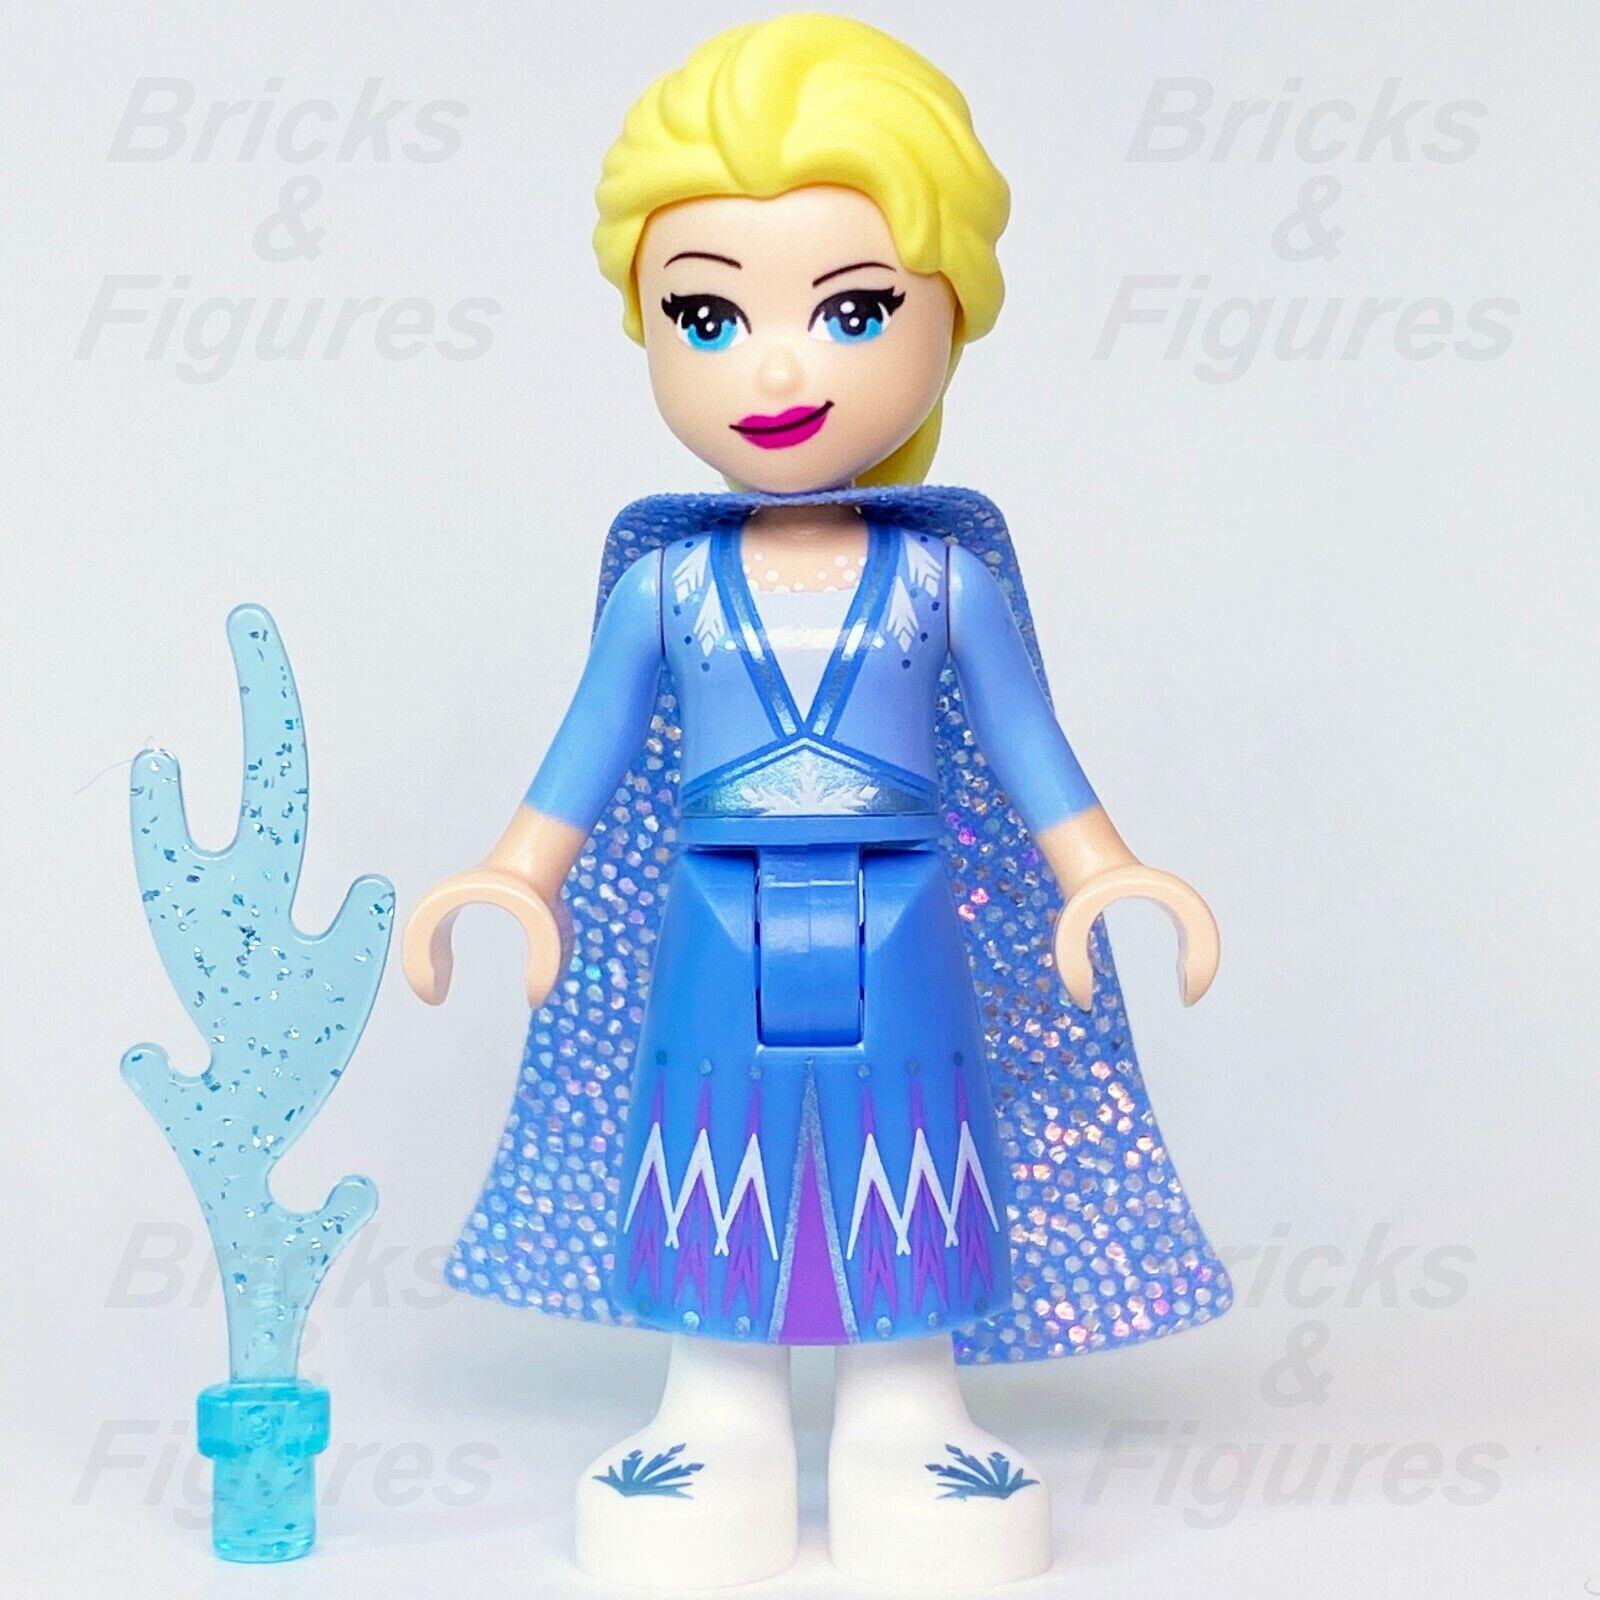 LEGO Disney Frozen 2 Elsa Minifigure w/ Glitter Cape Princess Queen 41168 41166 - Bricks & Figures